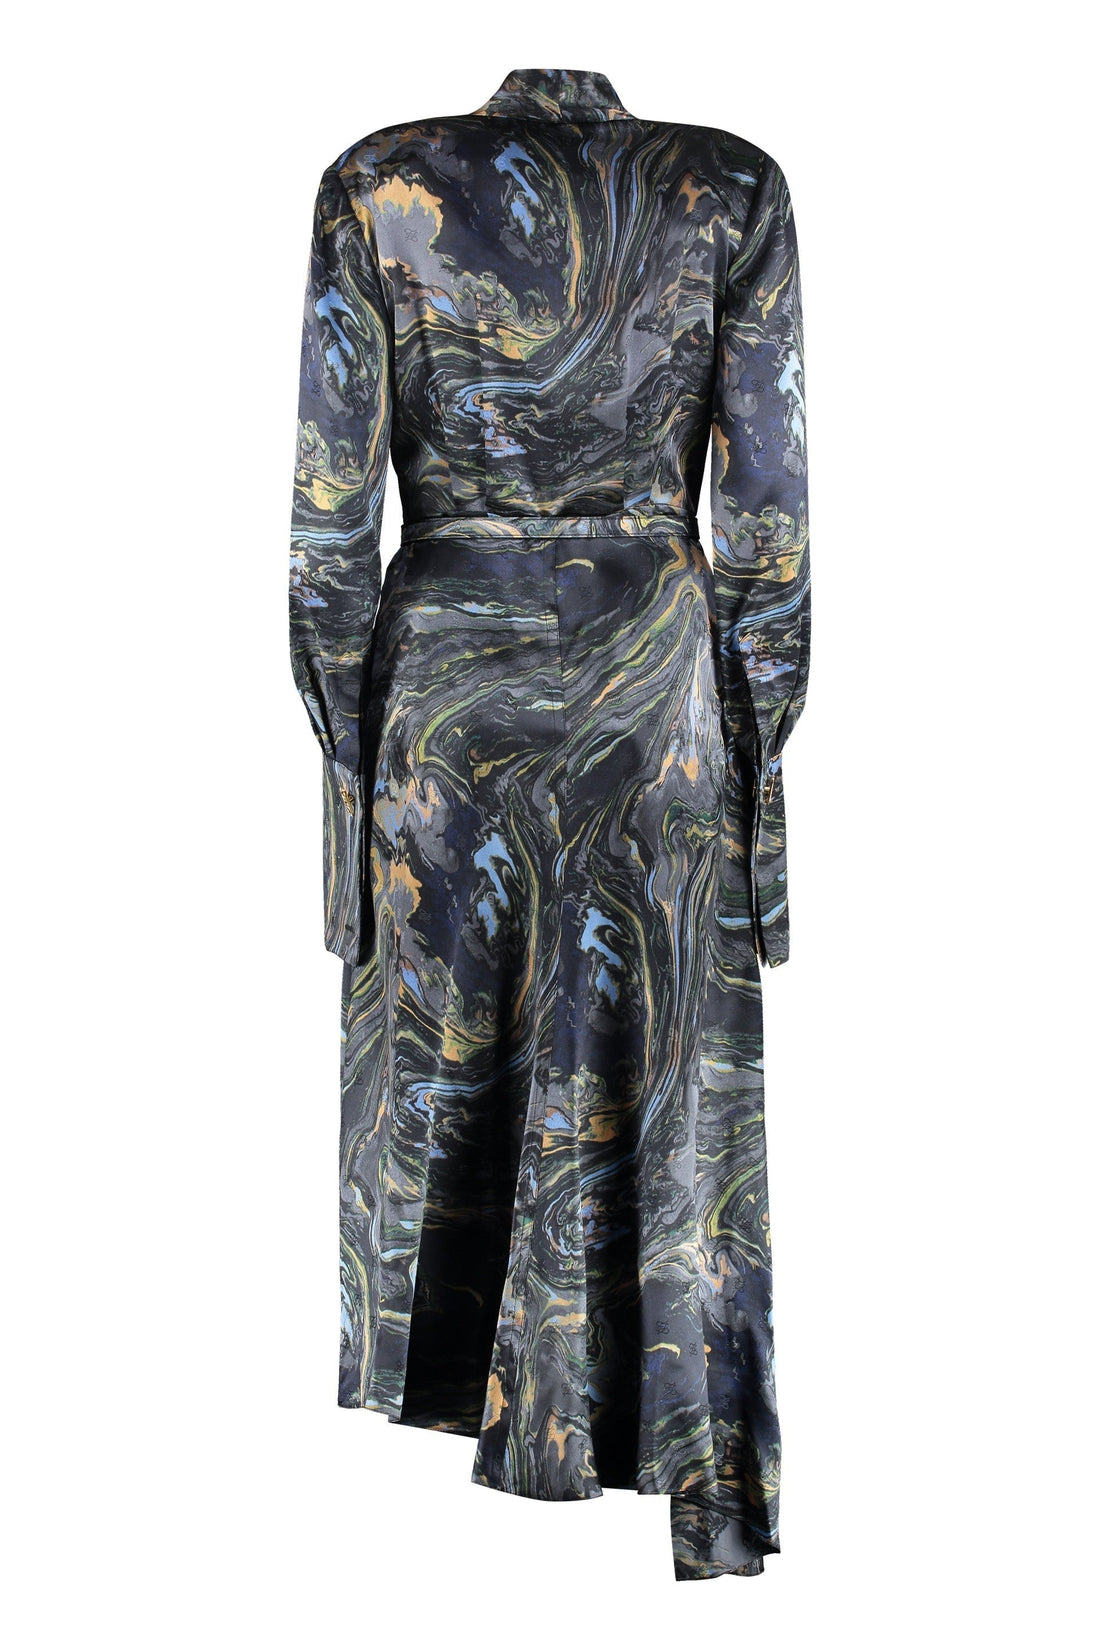 Fendi-OUTLET-SALE-Printed silk dress-ARCHIVIST